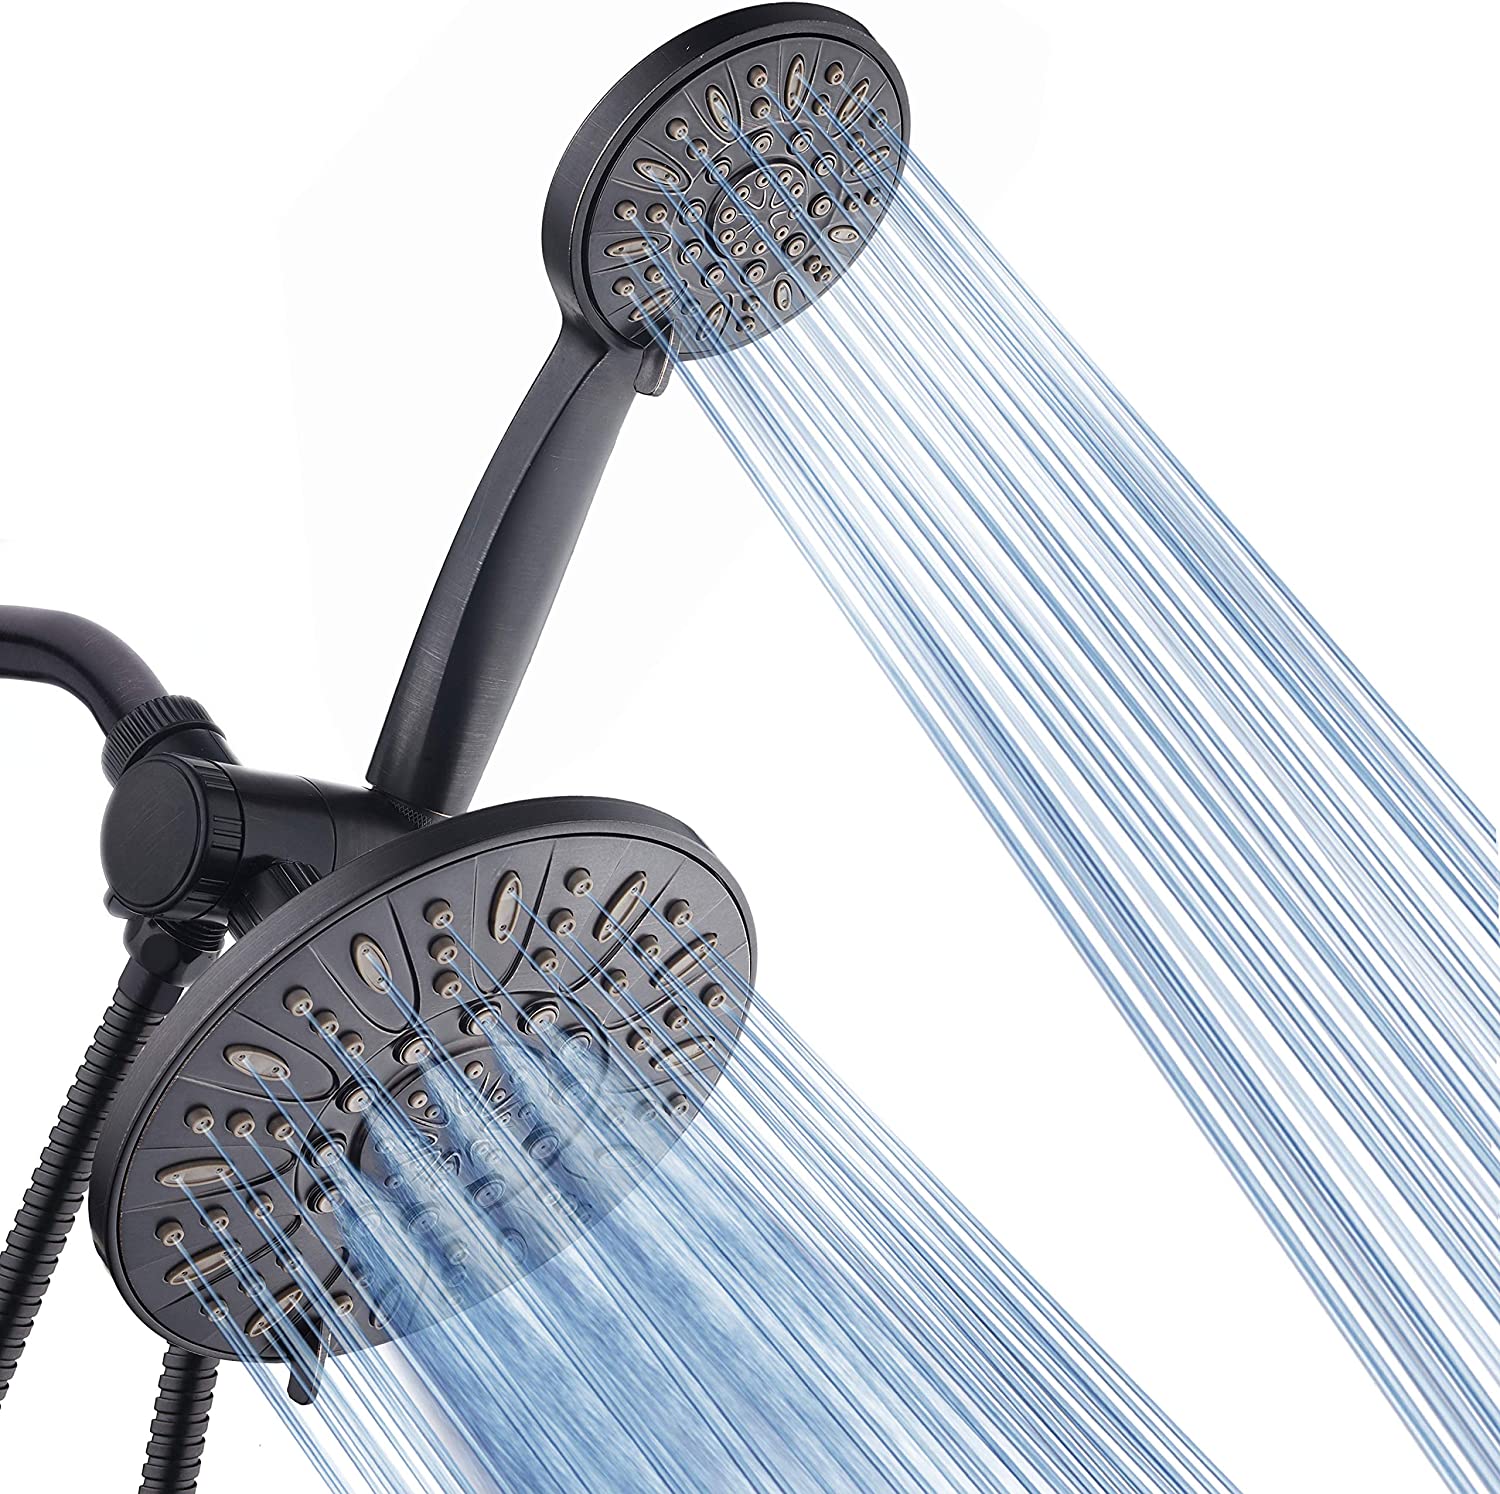 AquaDance 7 inch Premium High Pressure Handheld shower head